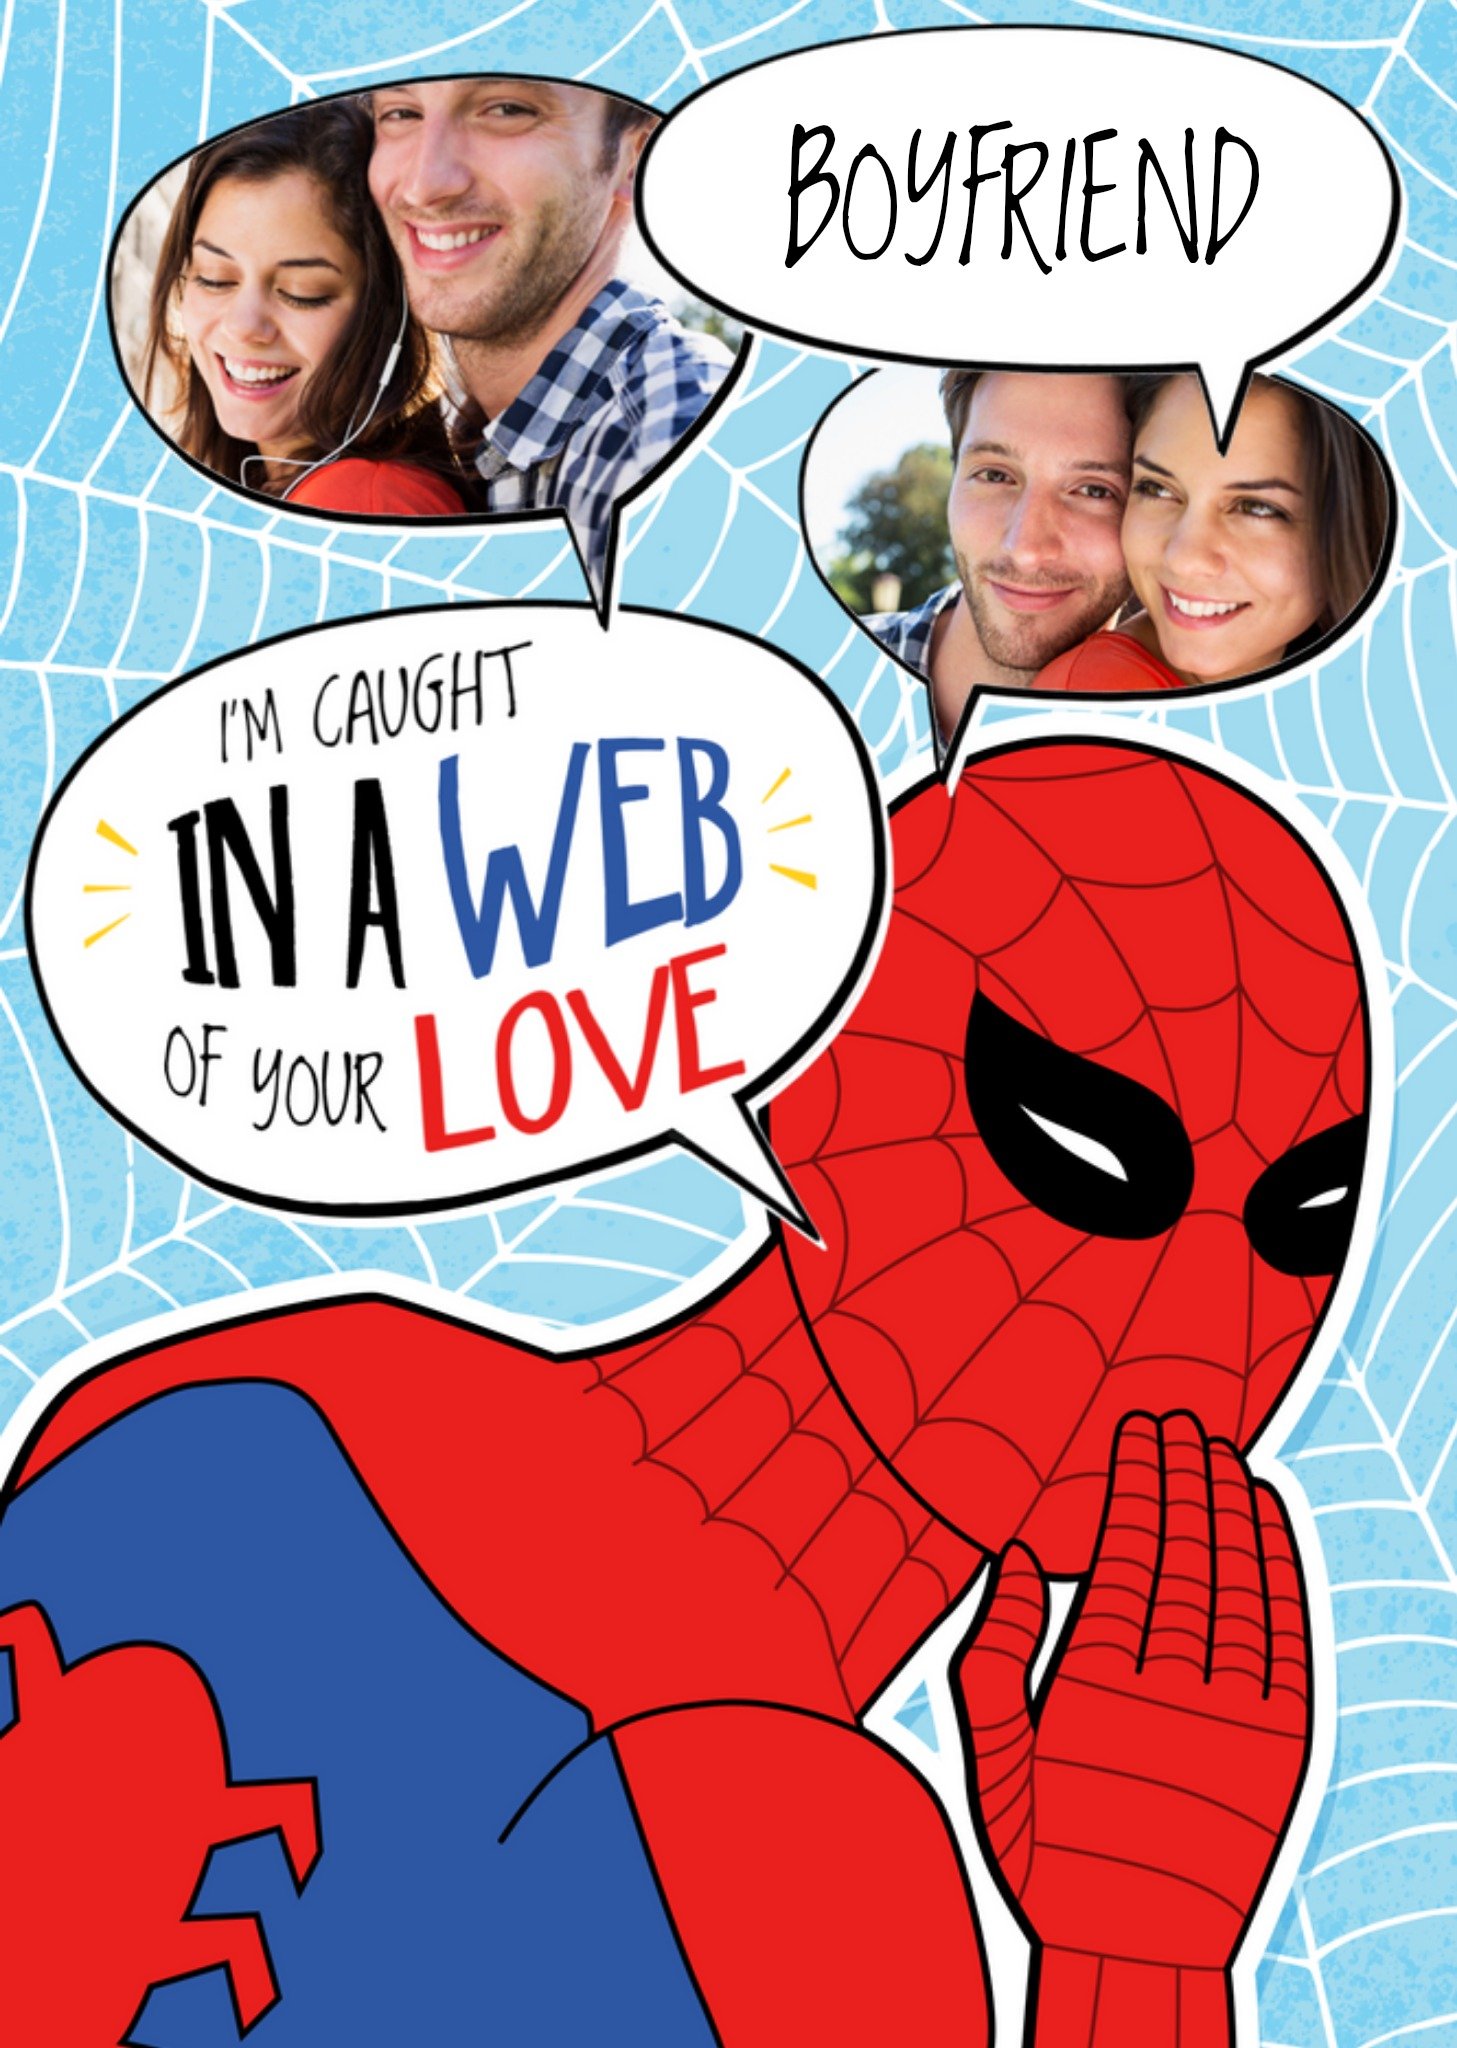 Spiderman - Valentijnskaart - Caught in a web of your love